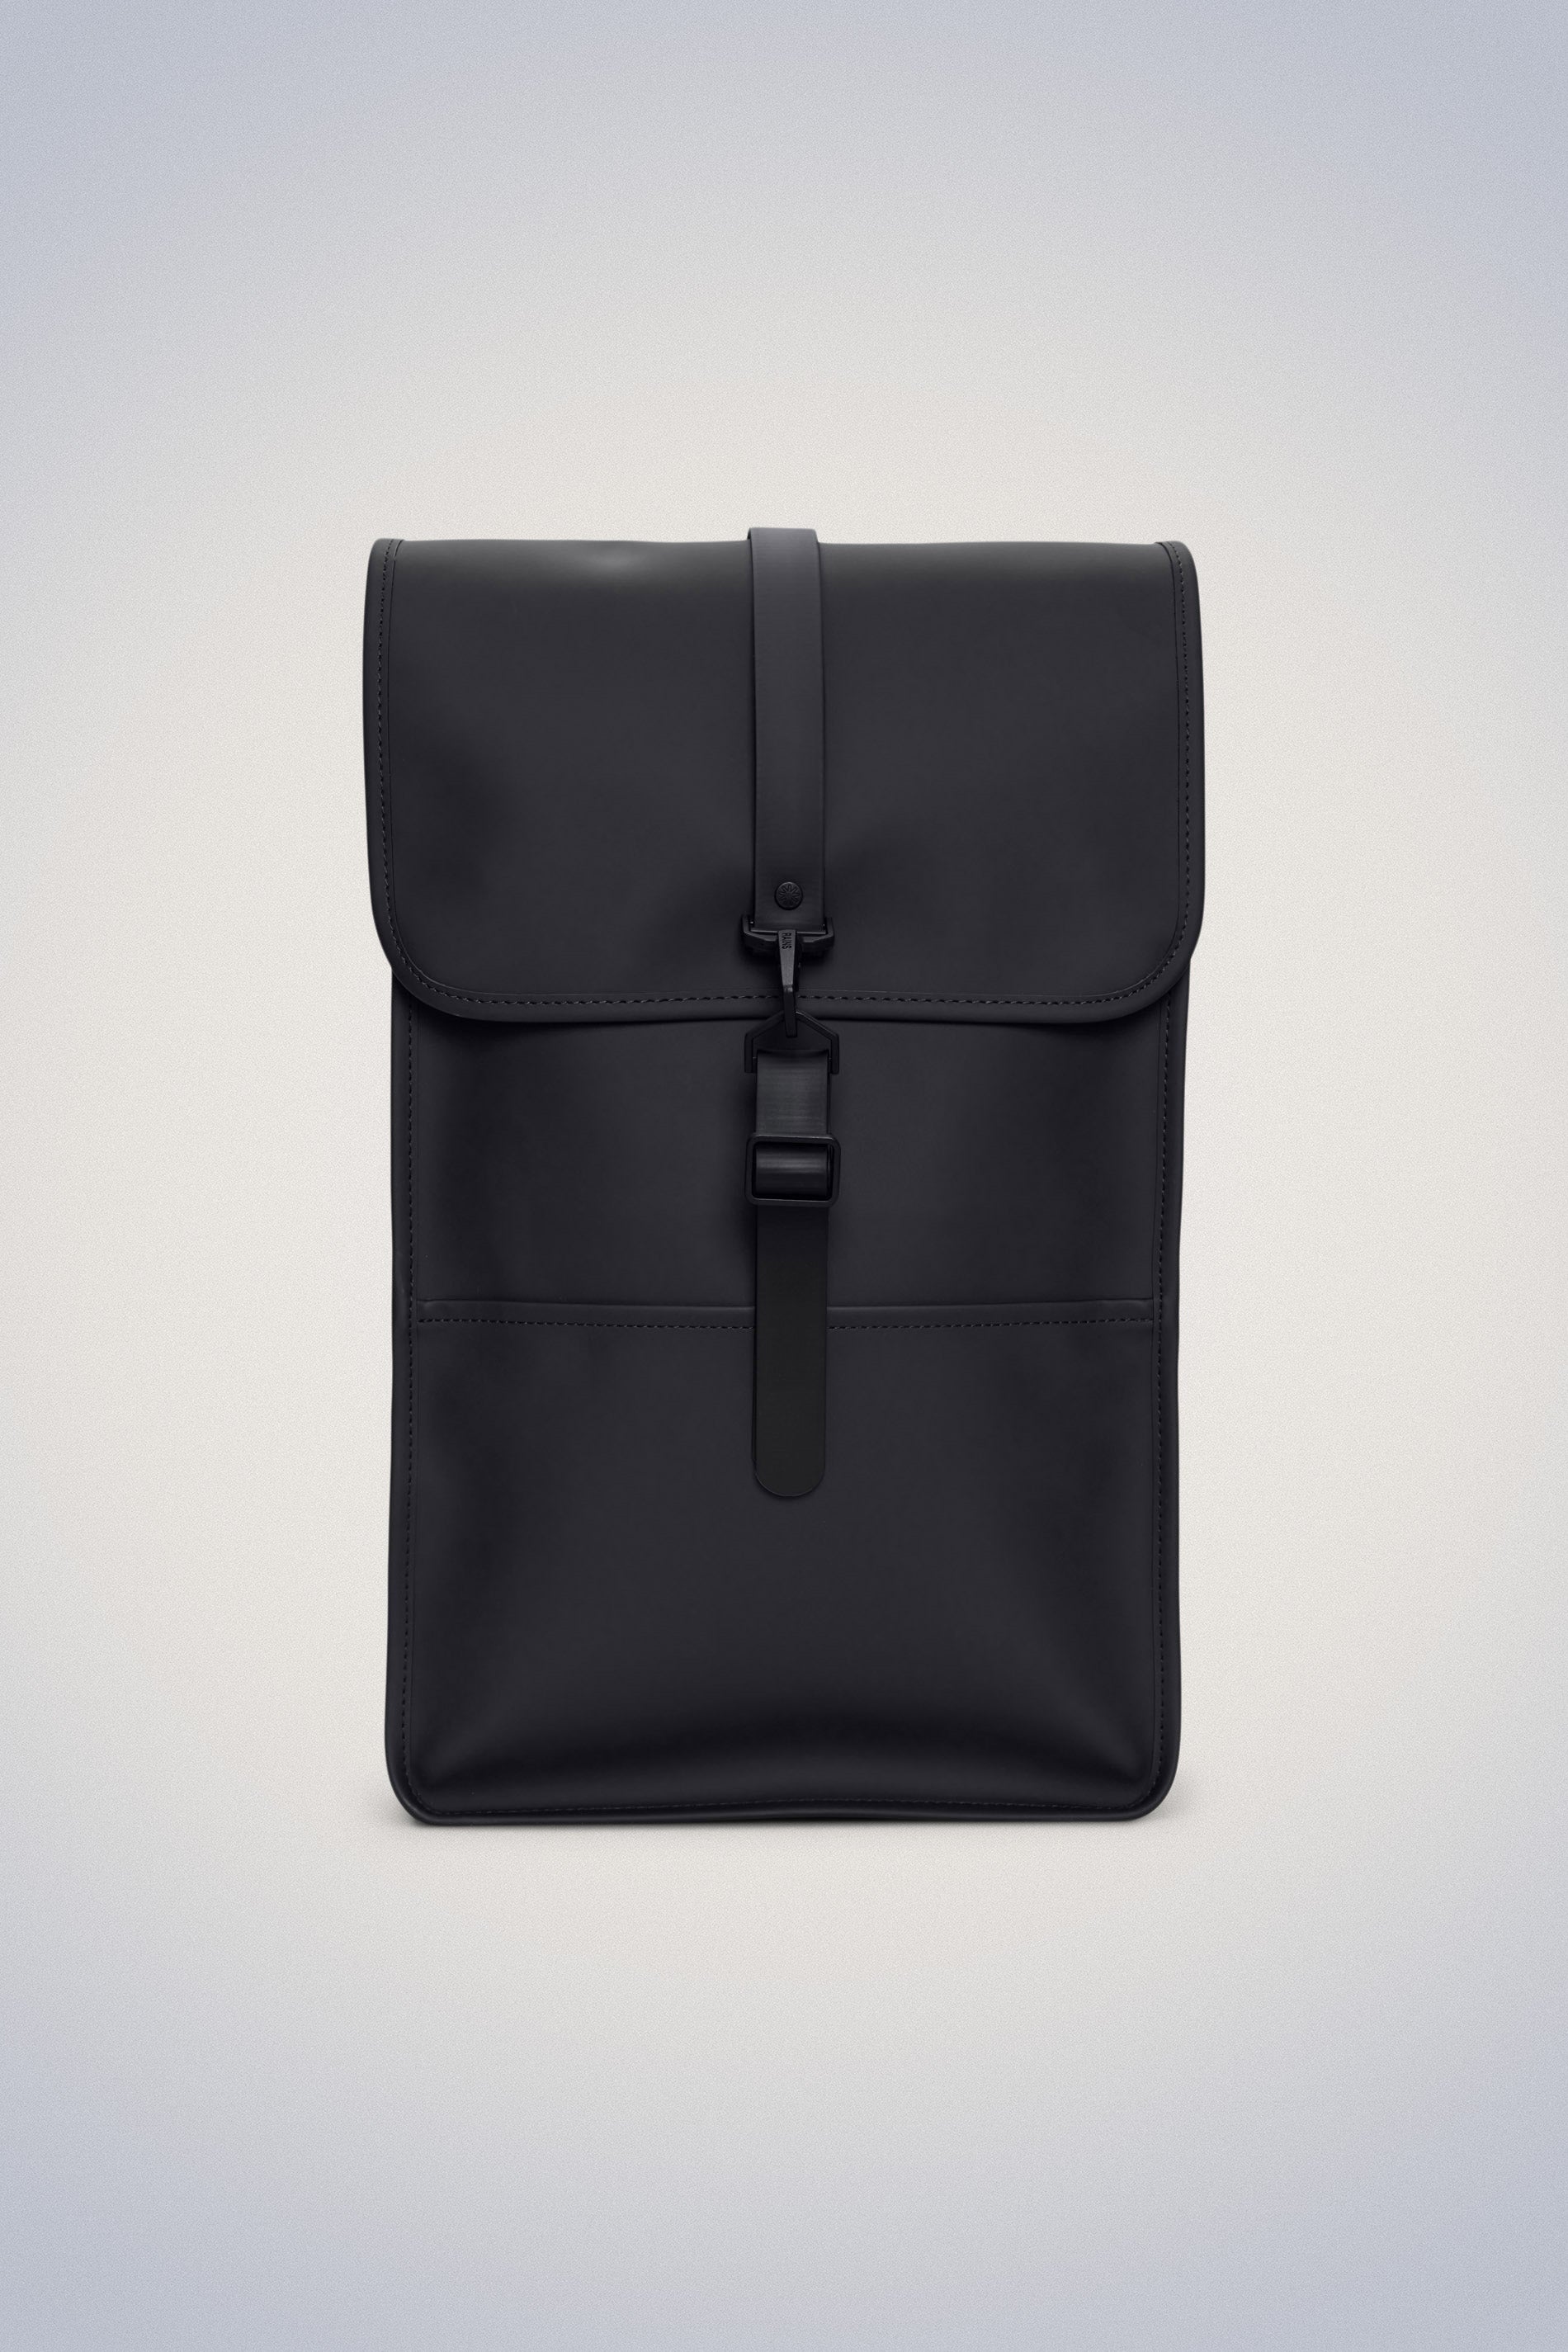 Rains Black Mini Tote Bag | Urban Outfitters UK